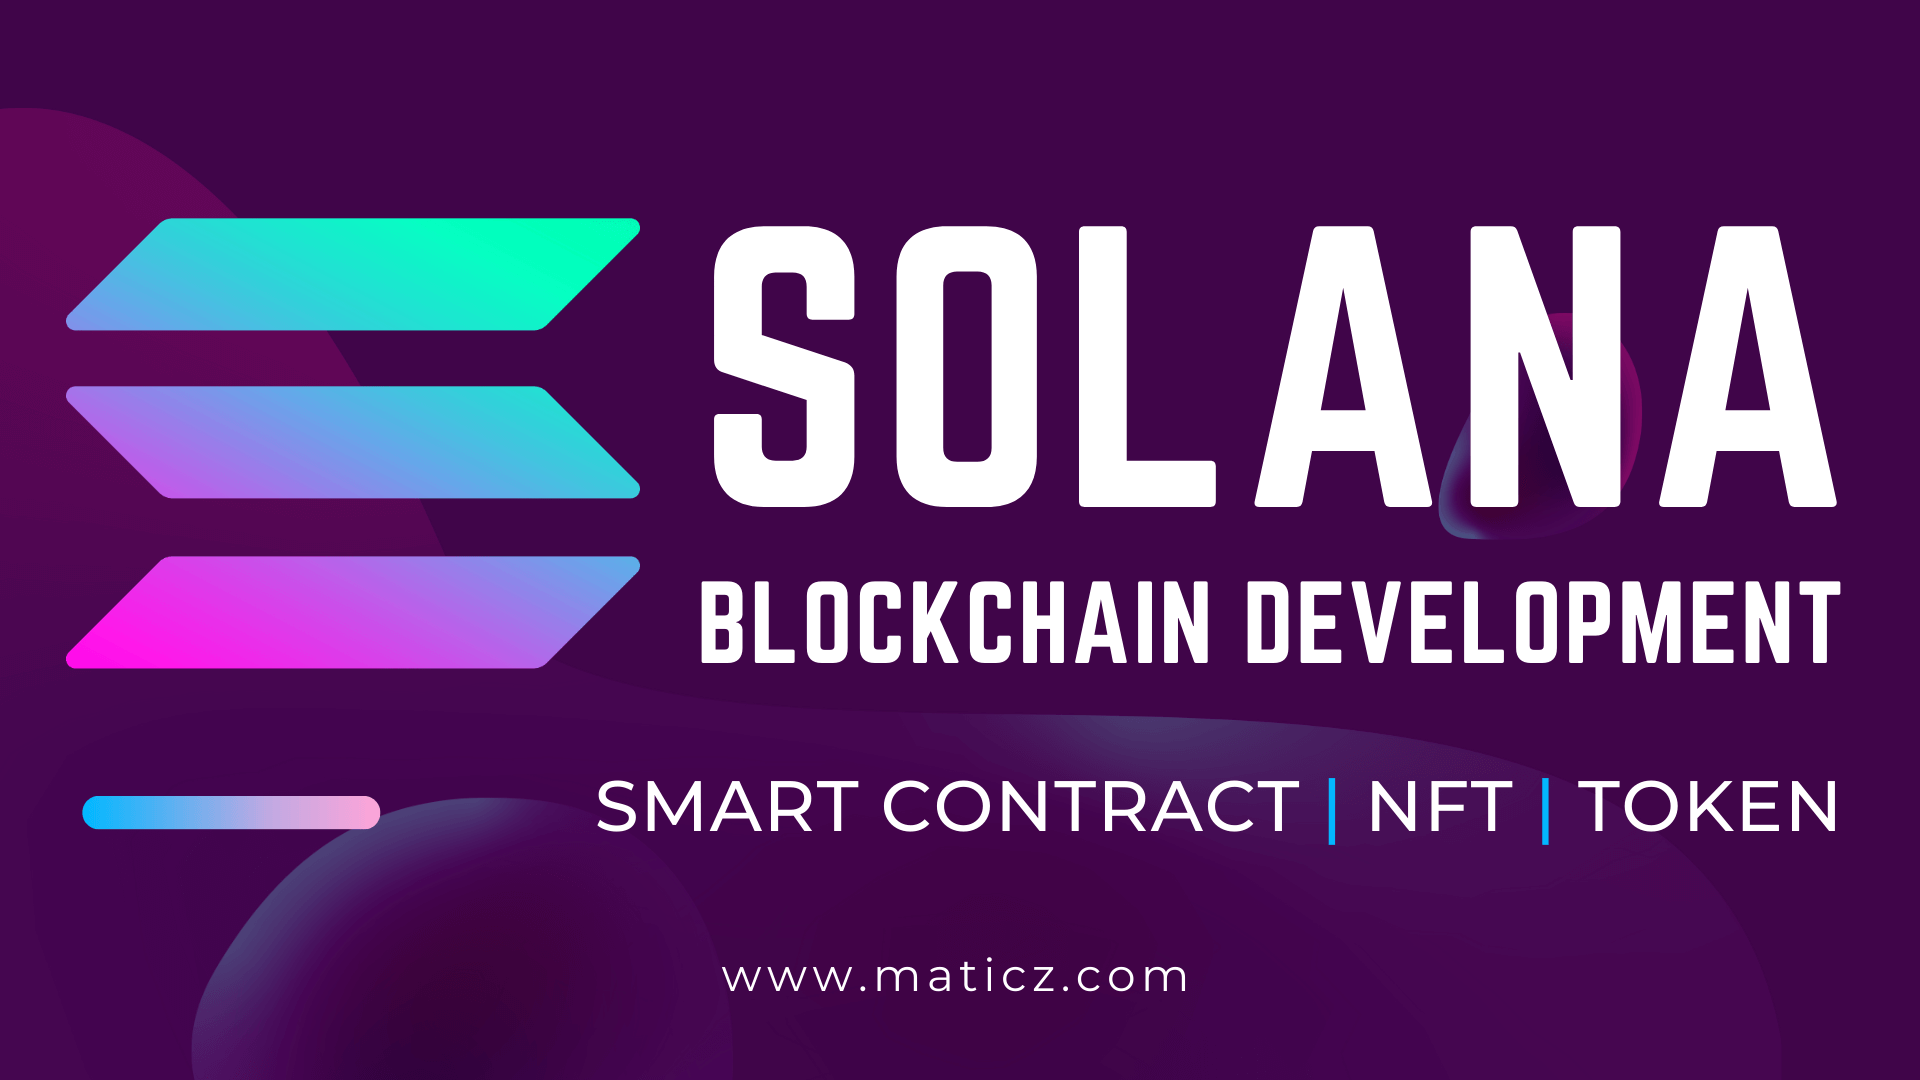 Solana Blockchain Development Company & Services